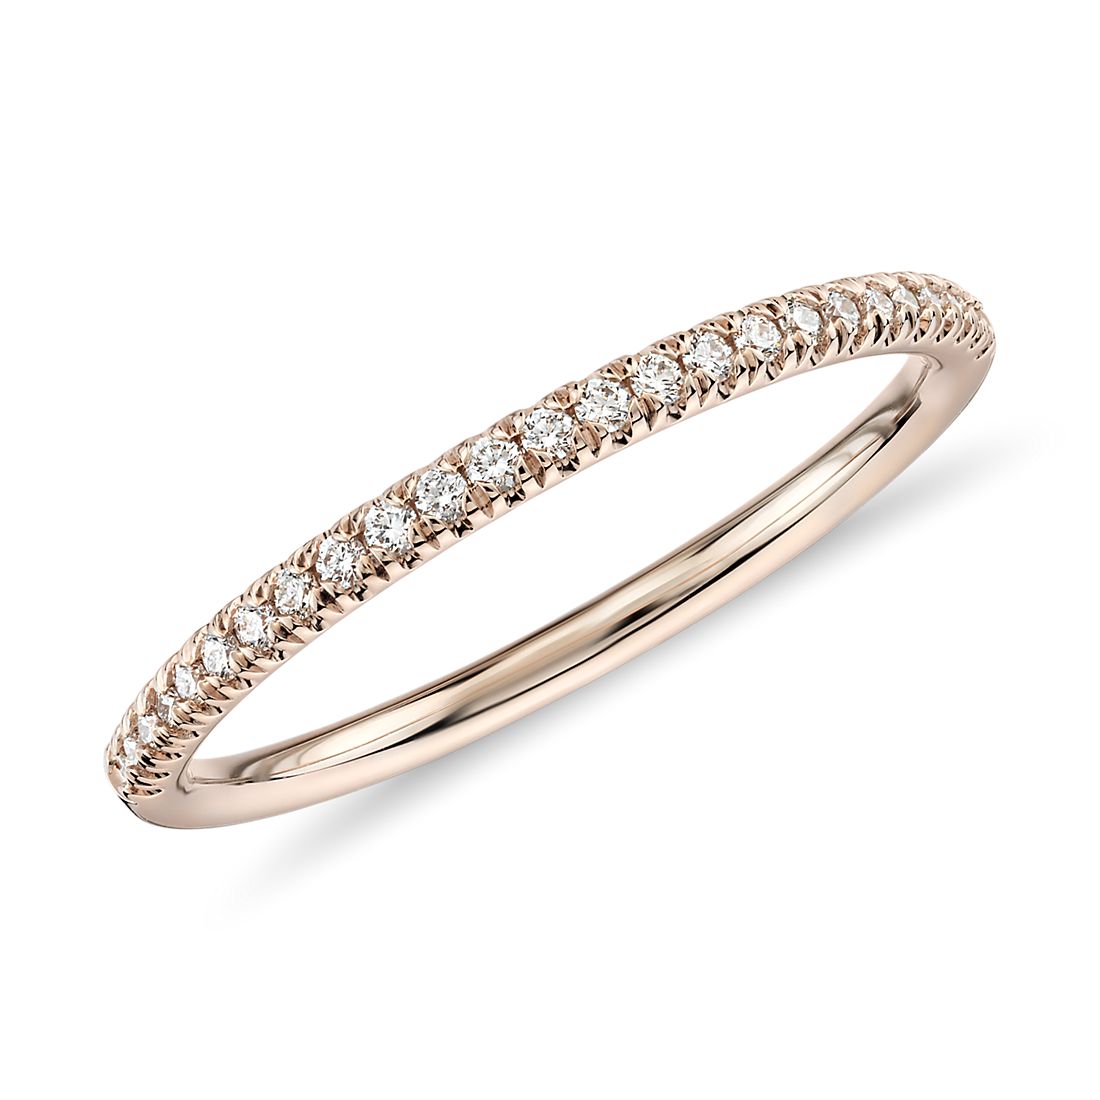 Petite Micropavé Diamond Ring in 14k Rose Gold